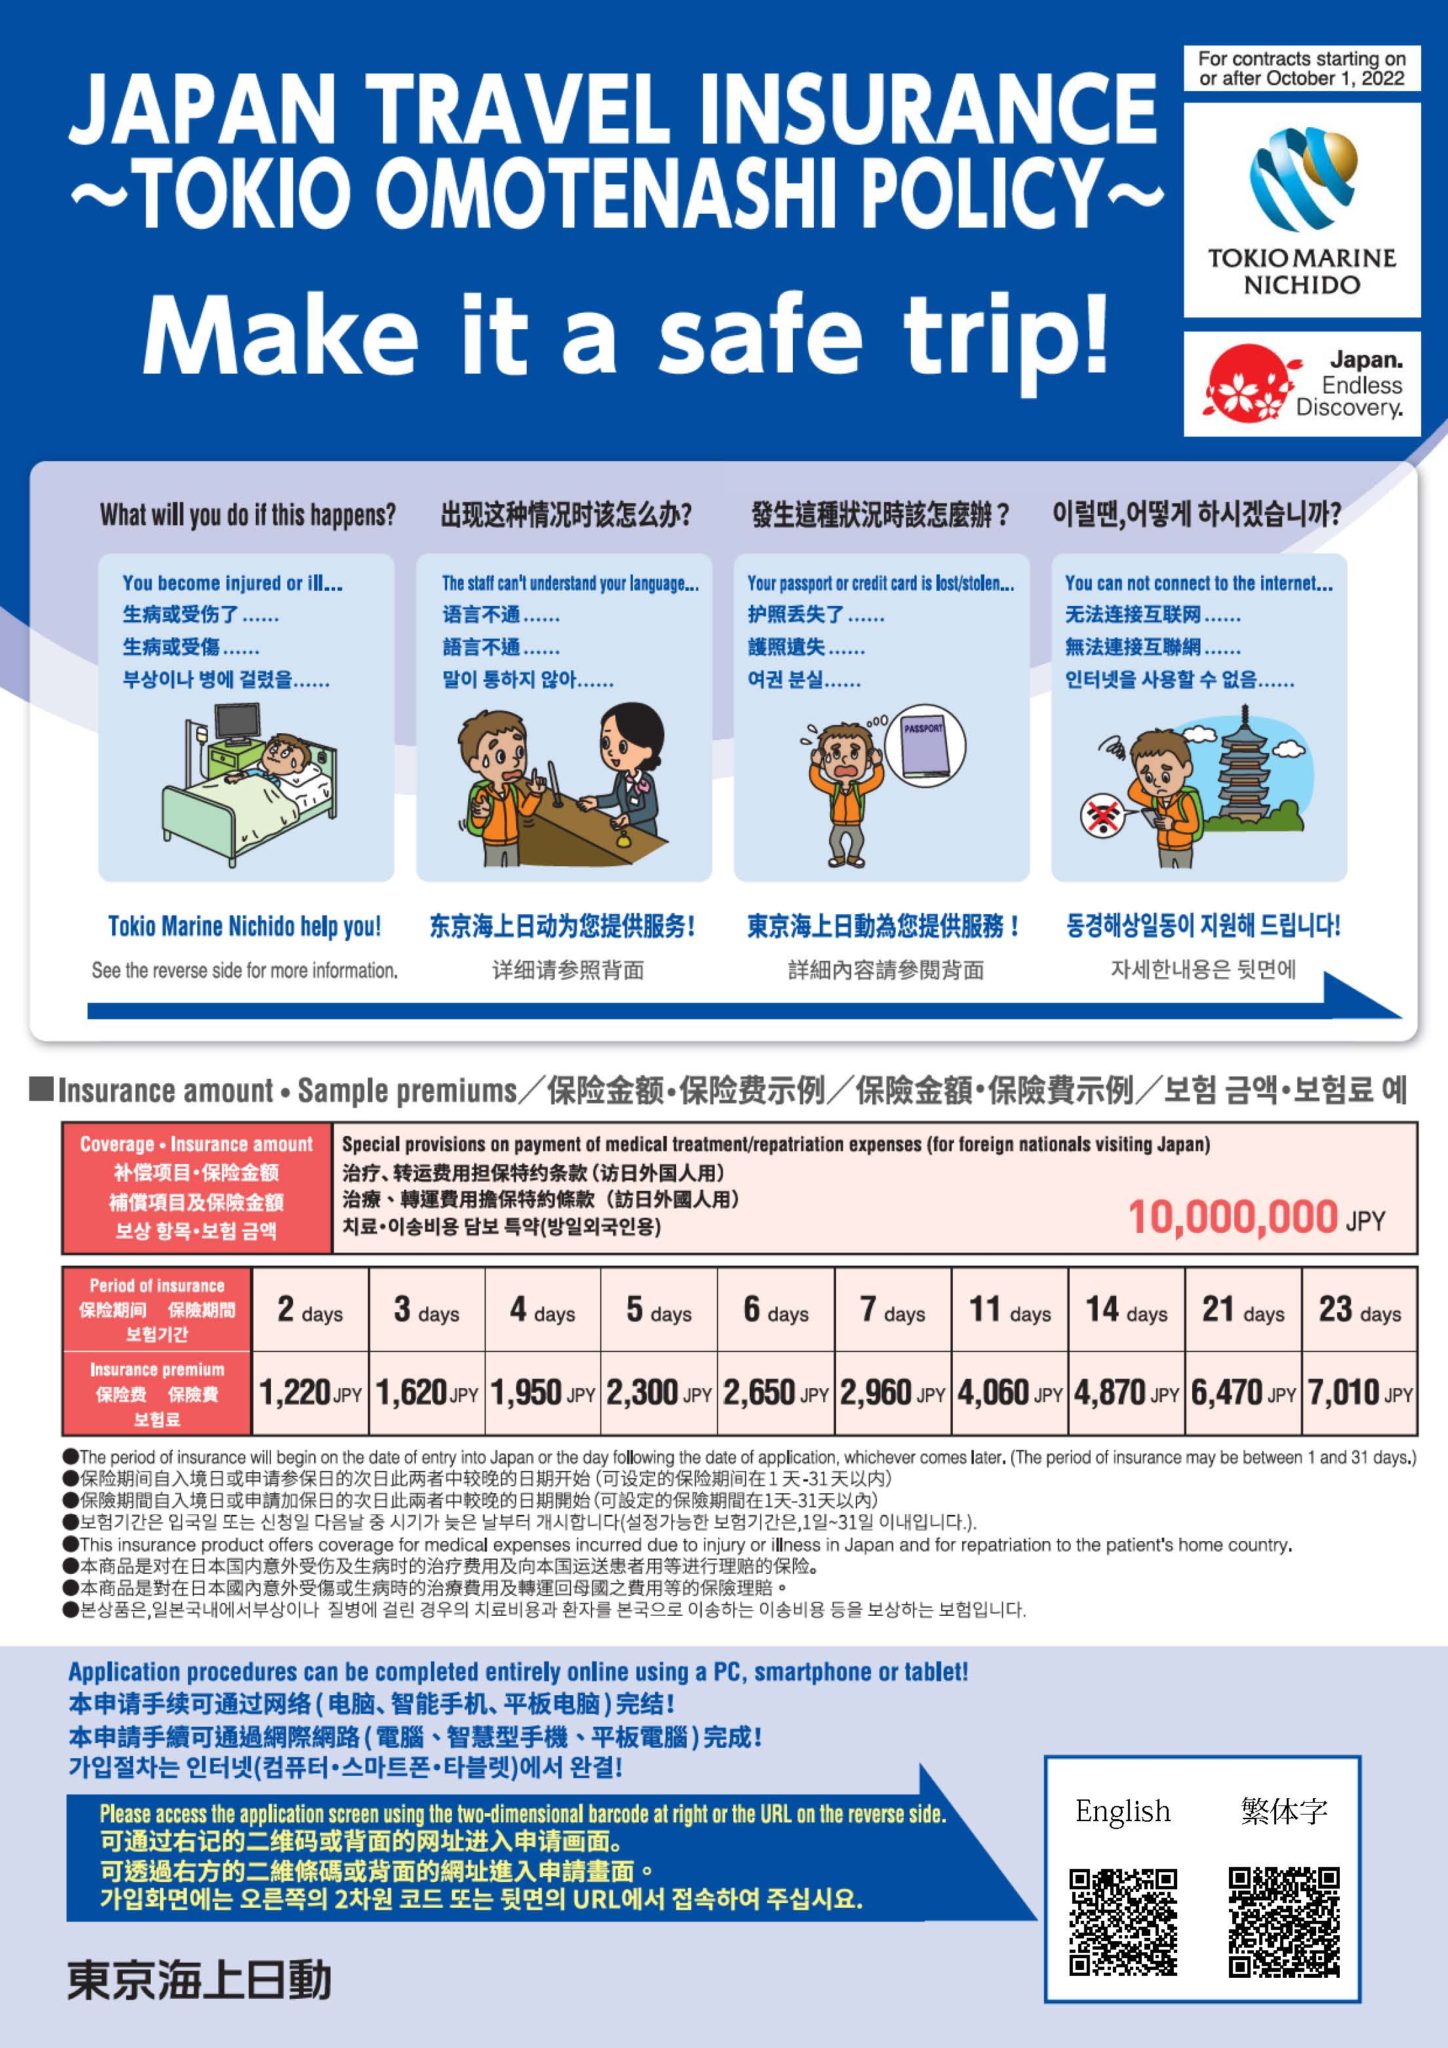 japan travel insurance companies